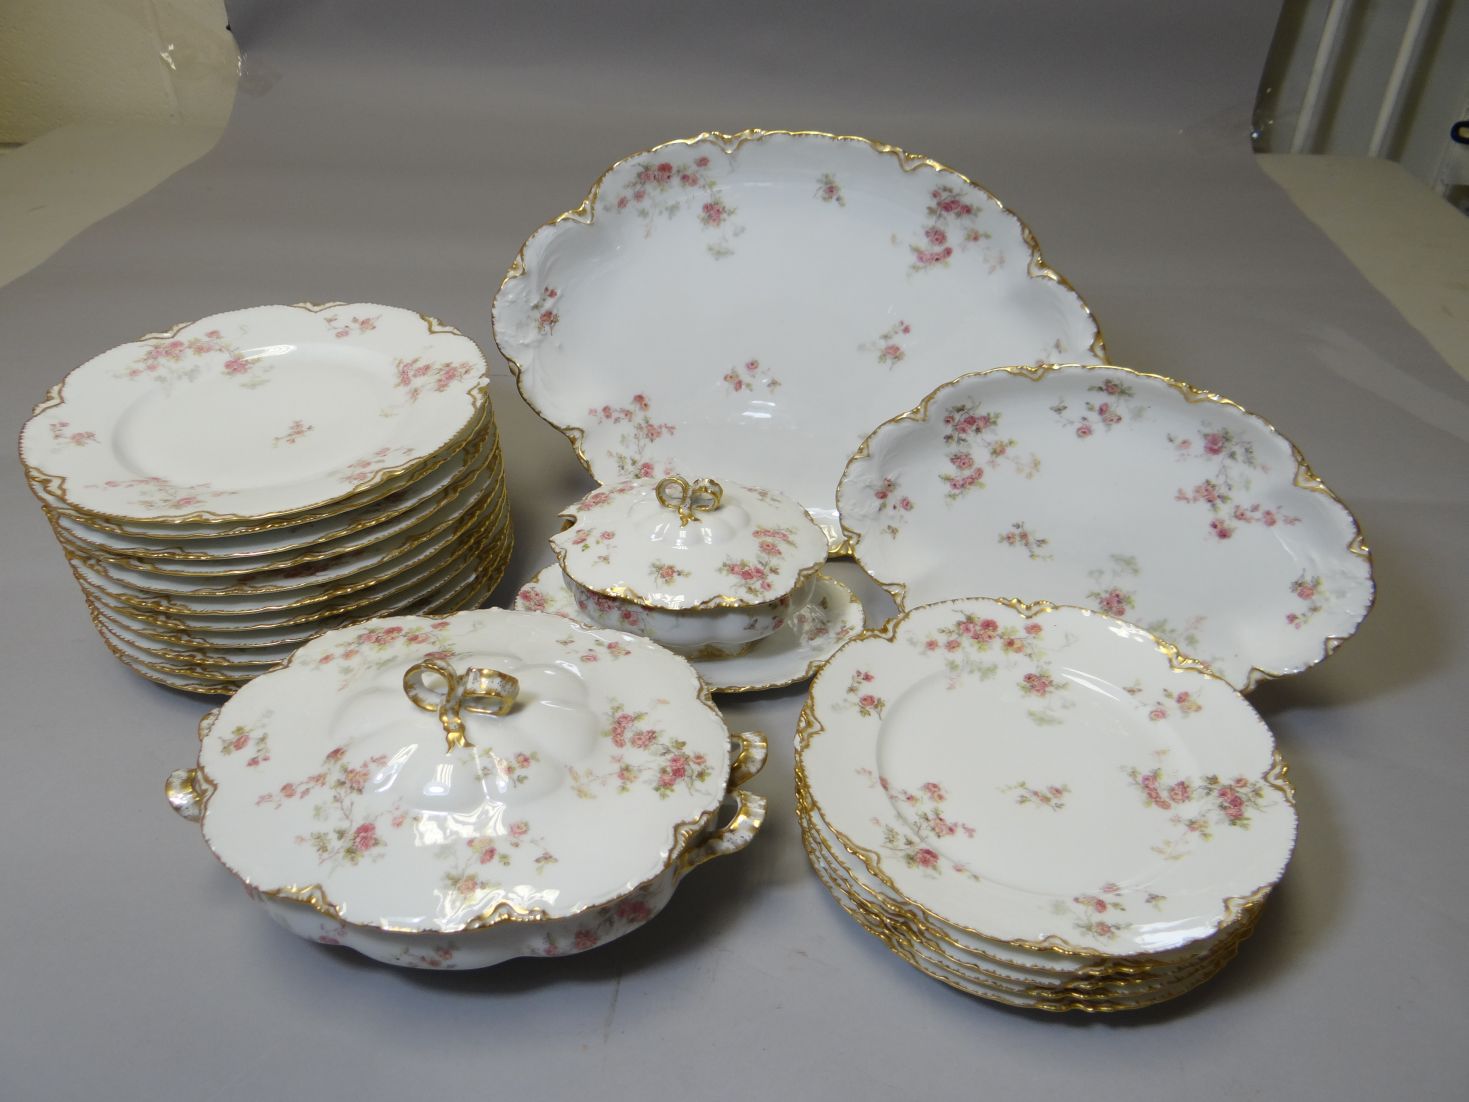 A Limoges floral decorated and gilt porcelain dinner service comprising a large platter, smaller